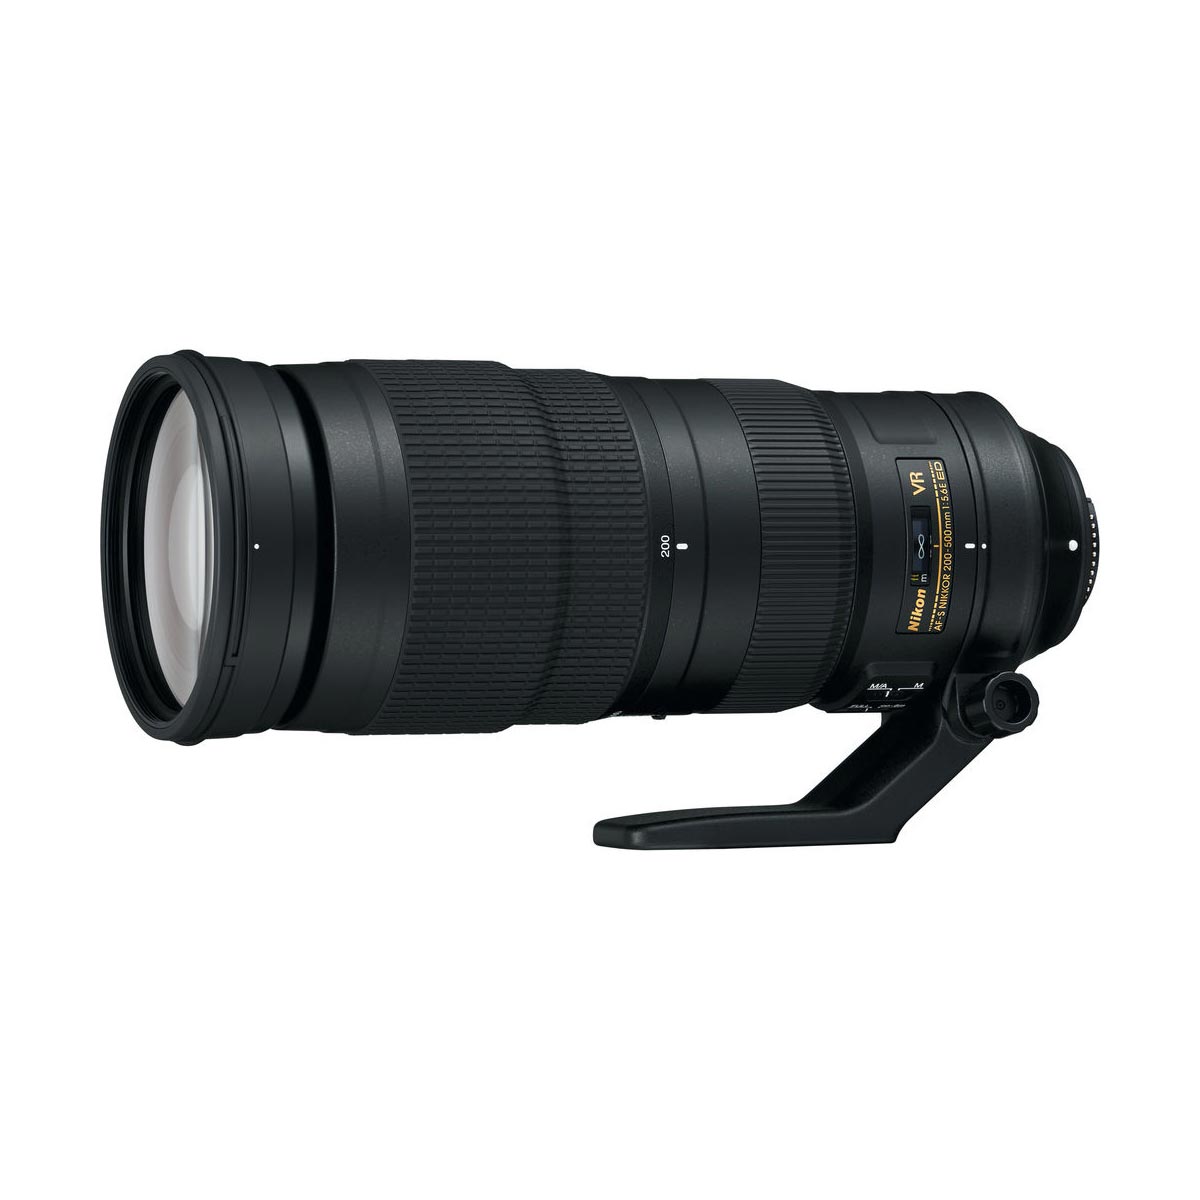 Nikon 200-500mm f/5.6E ED VR AF-S Lens *OPEN BOX*